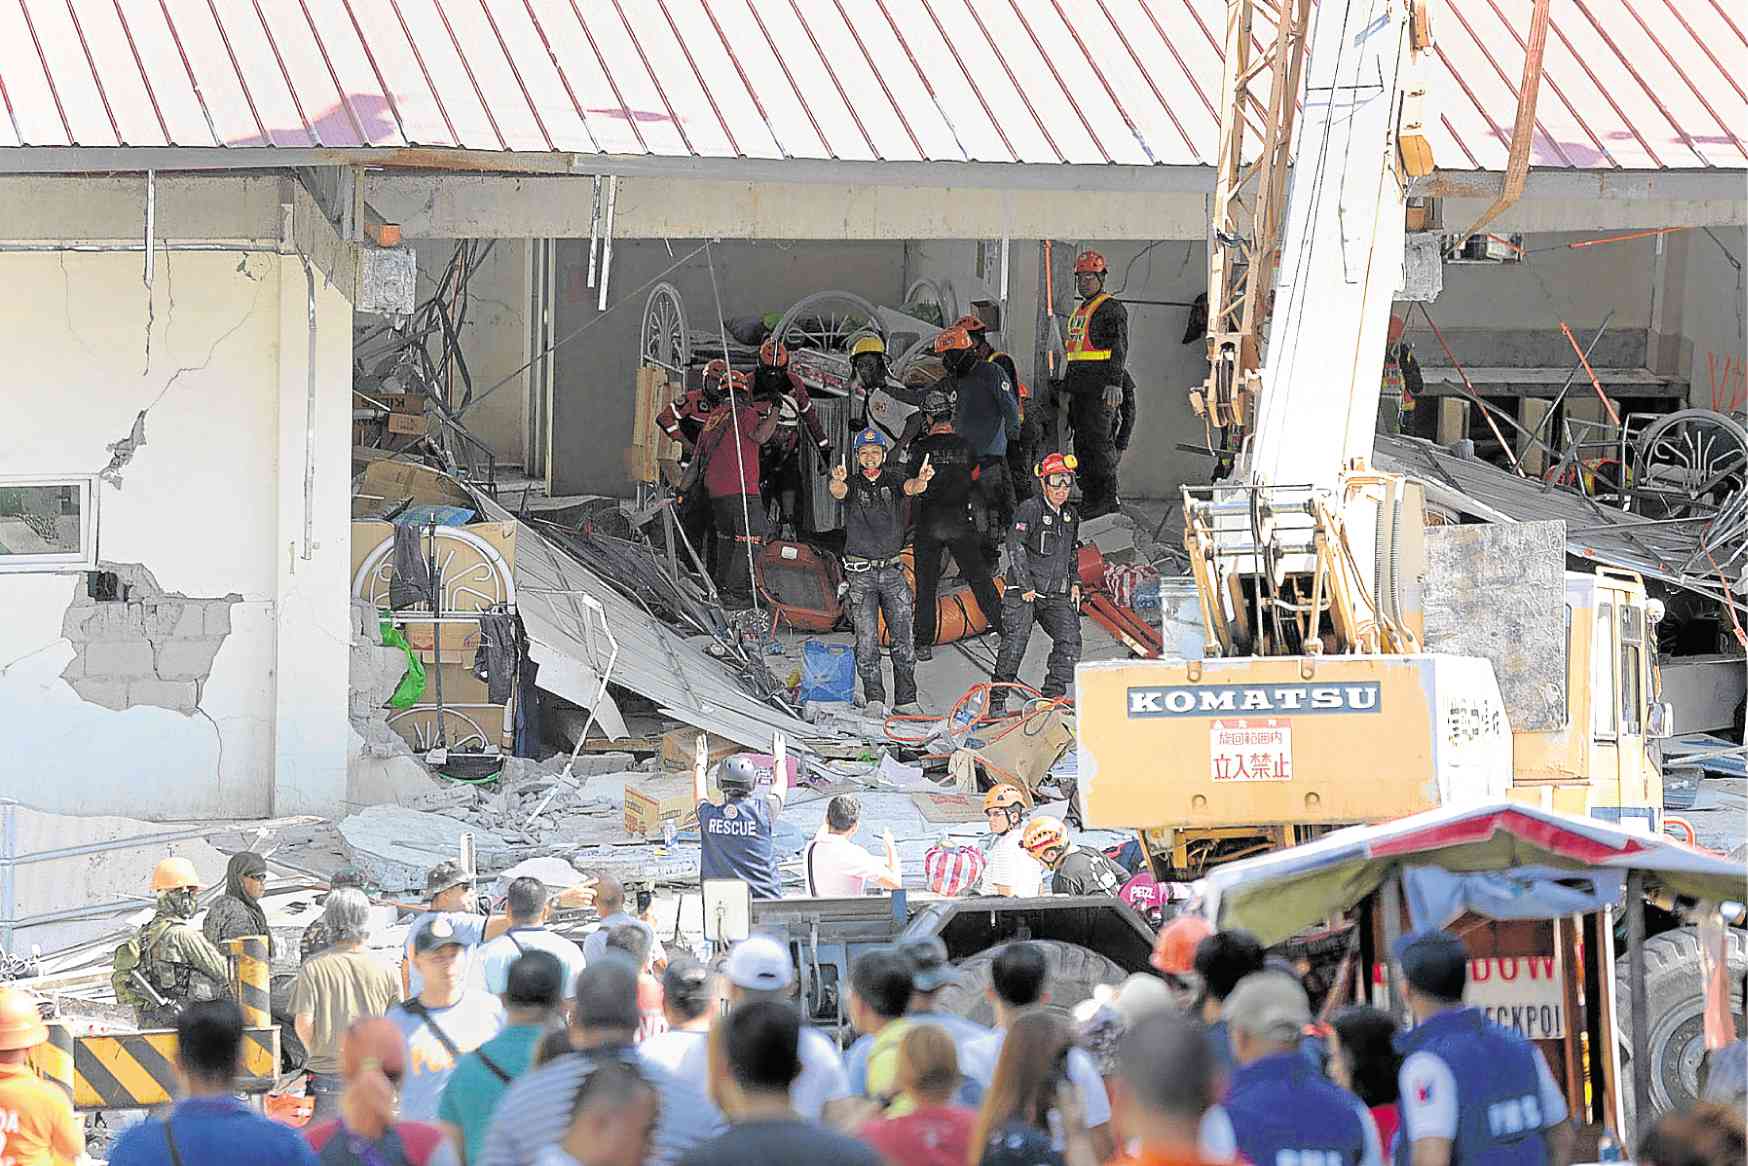 Supermarket gone in seconds, says earthquake survivor